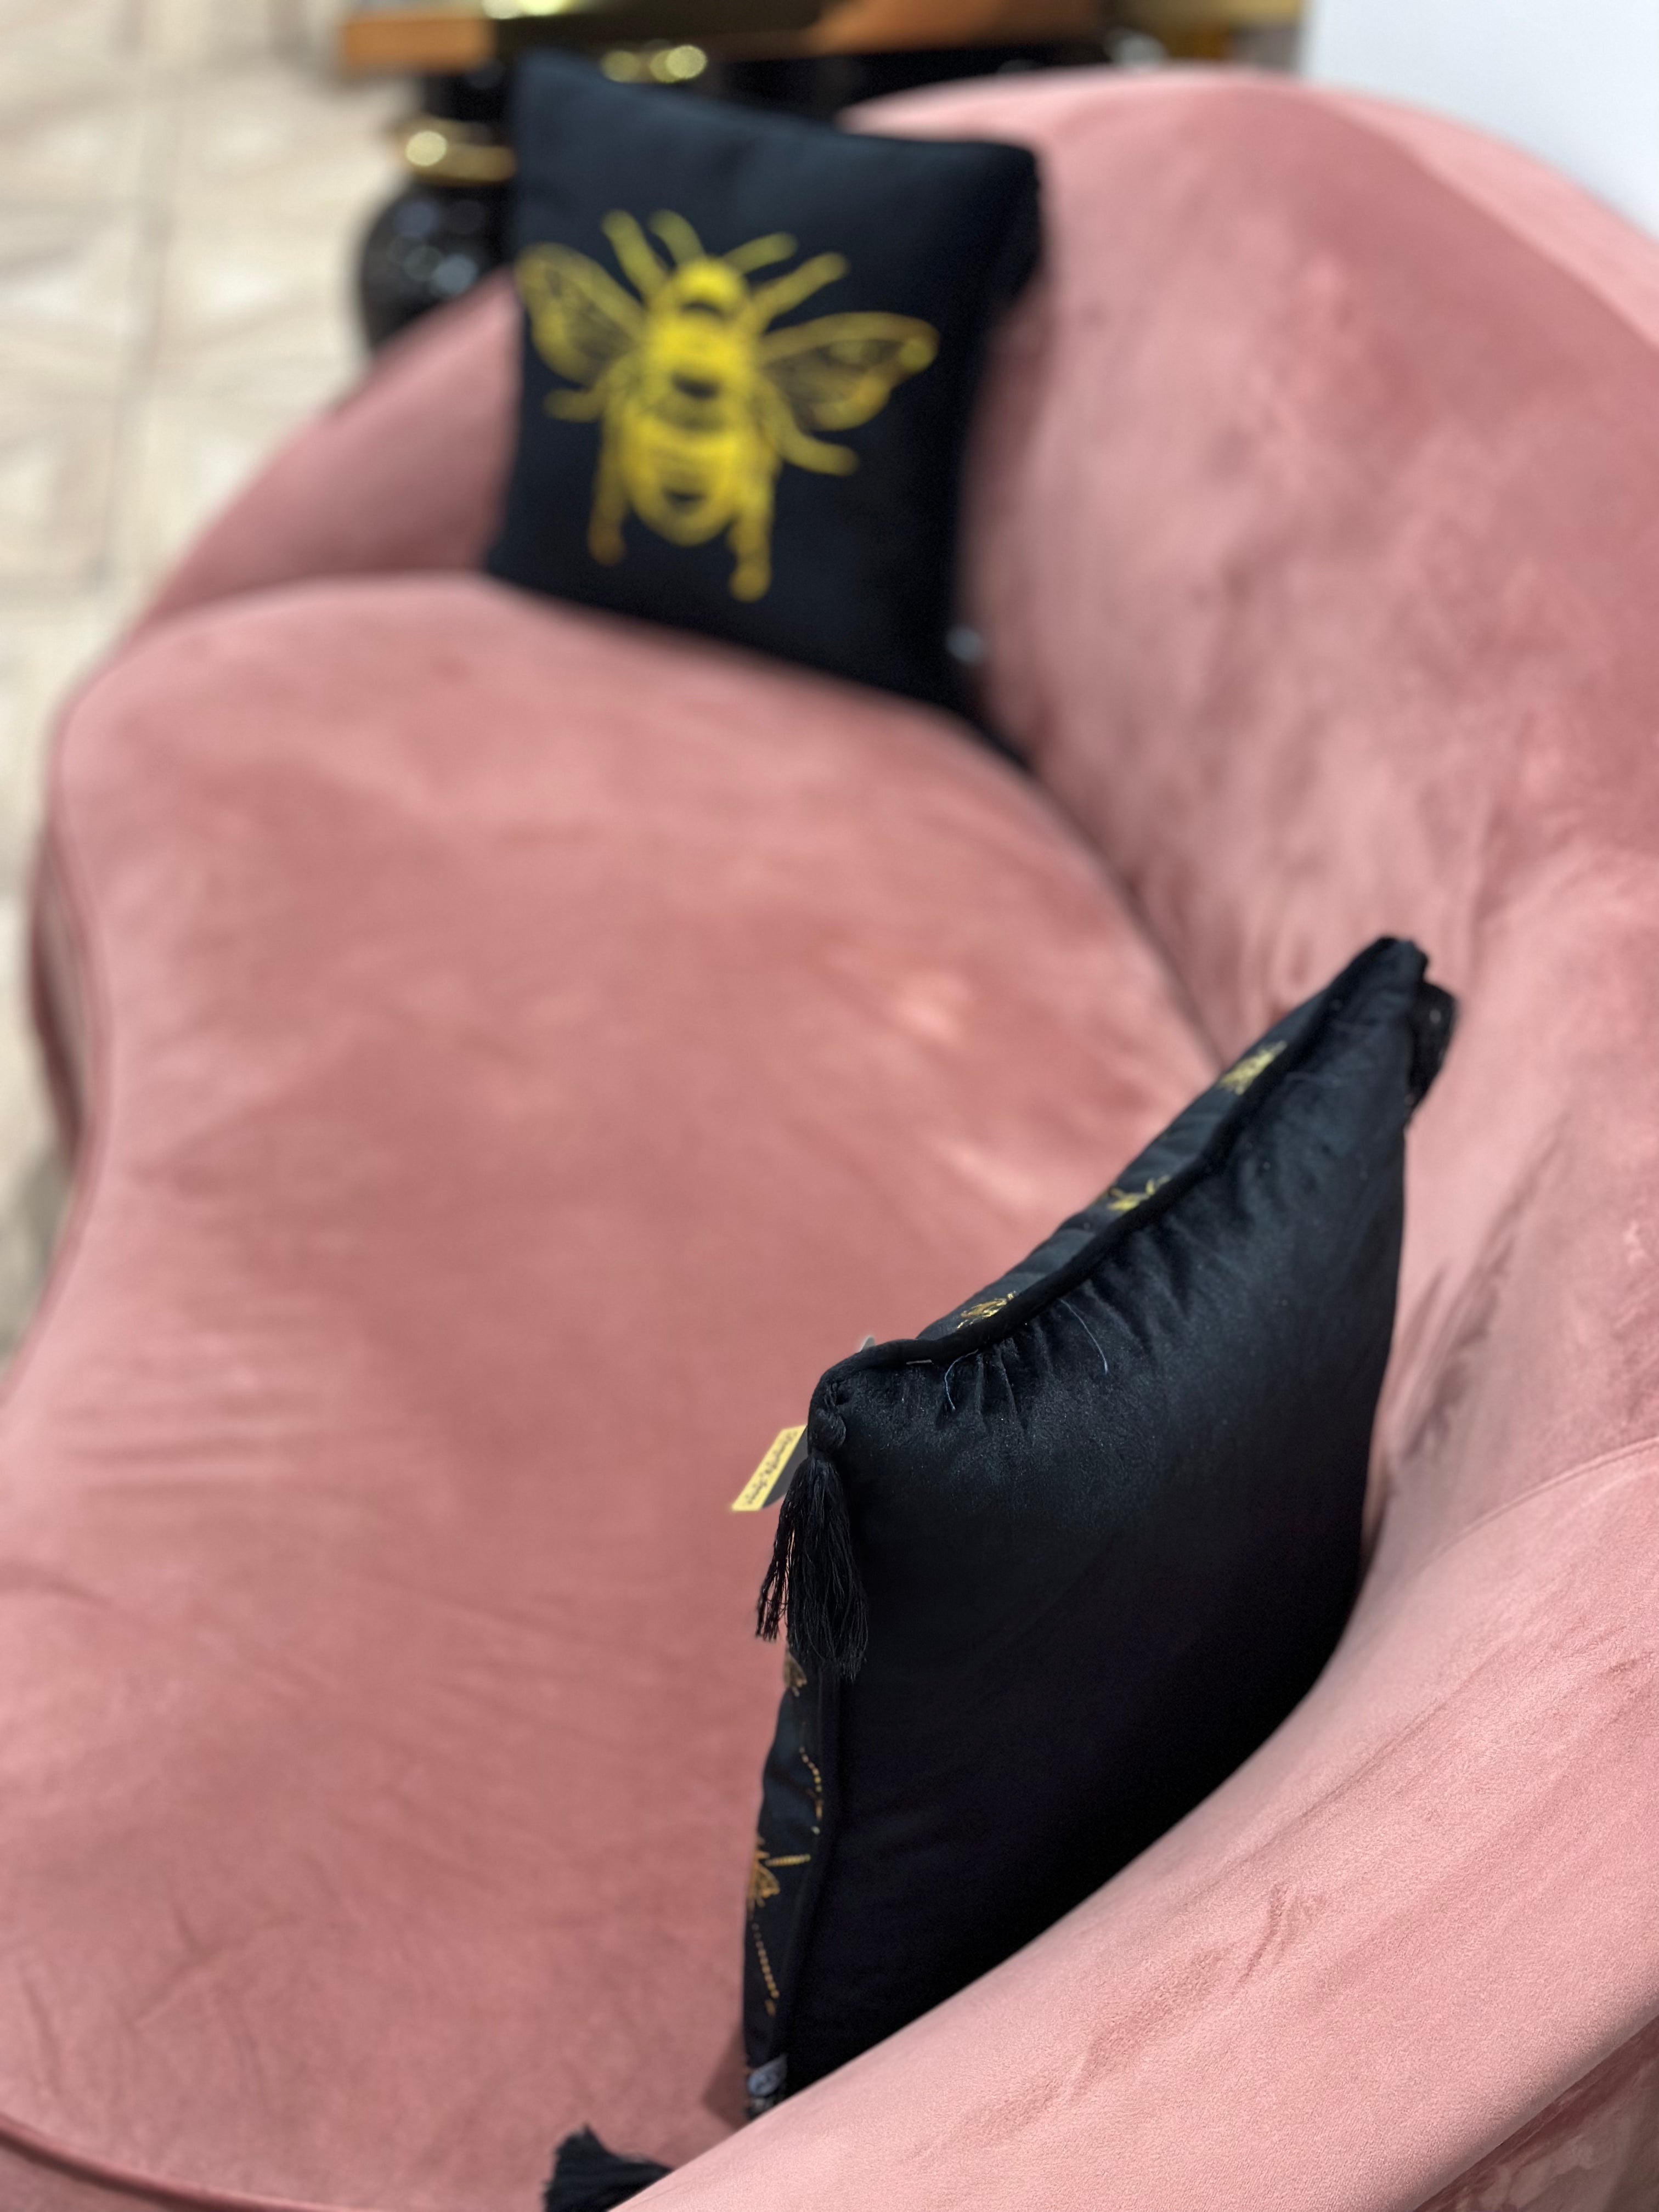 EX DISPLAY | Pink Velvet Sofa